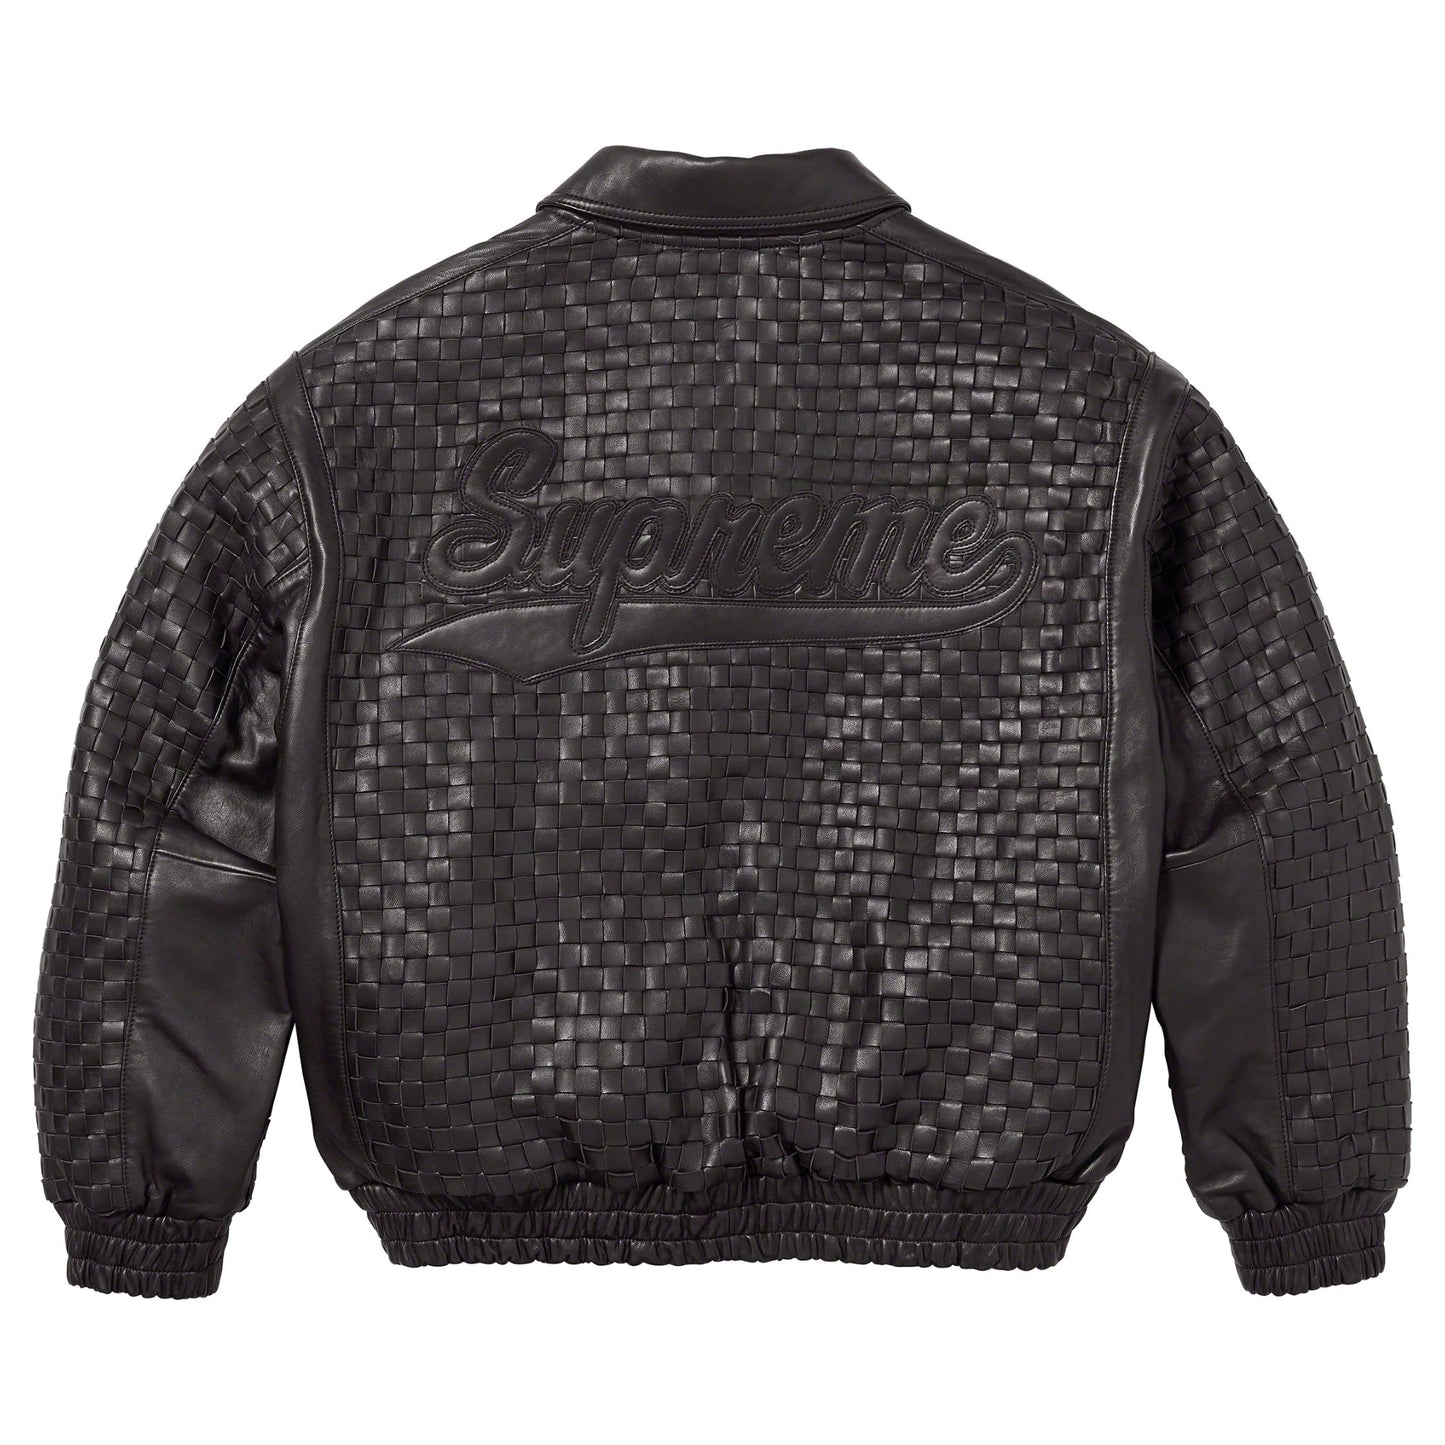 Supreme Woven Leather Varsity Jacket Black